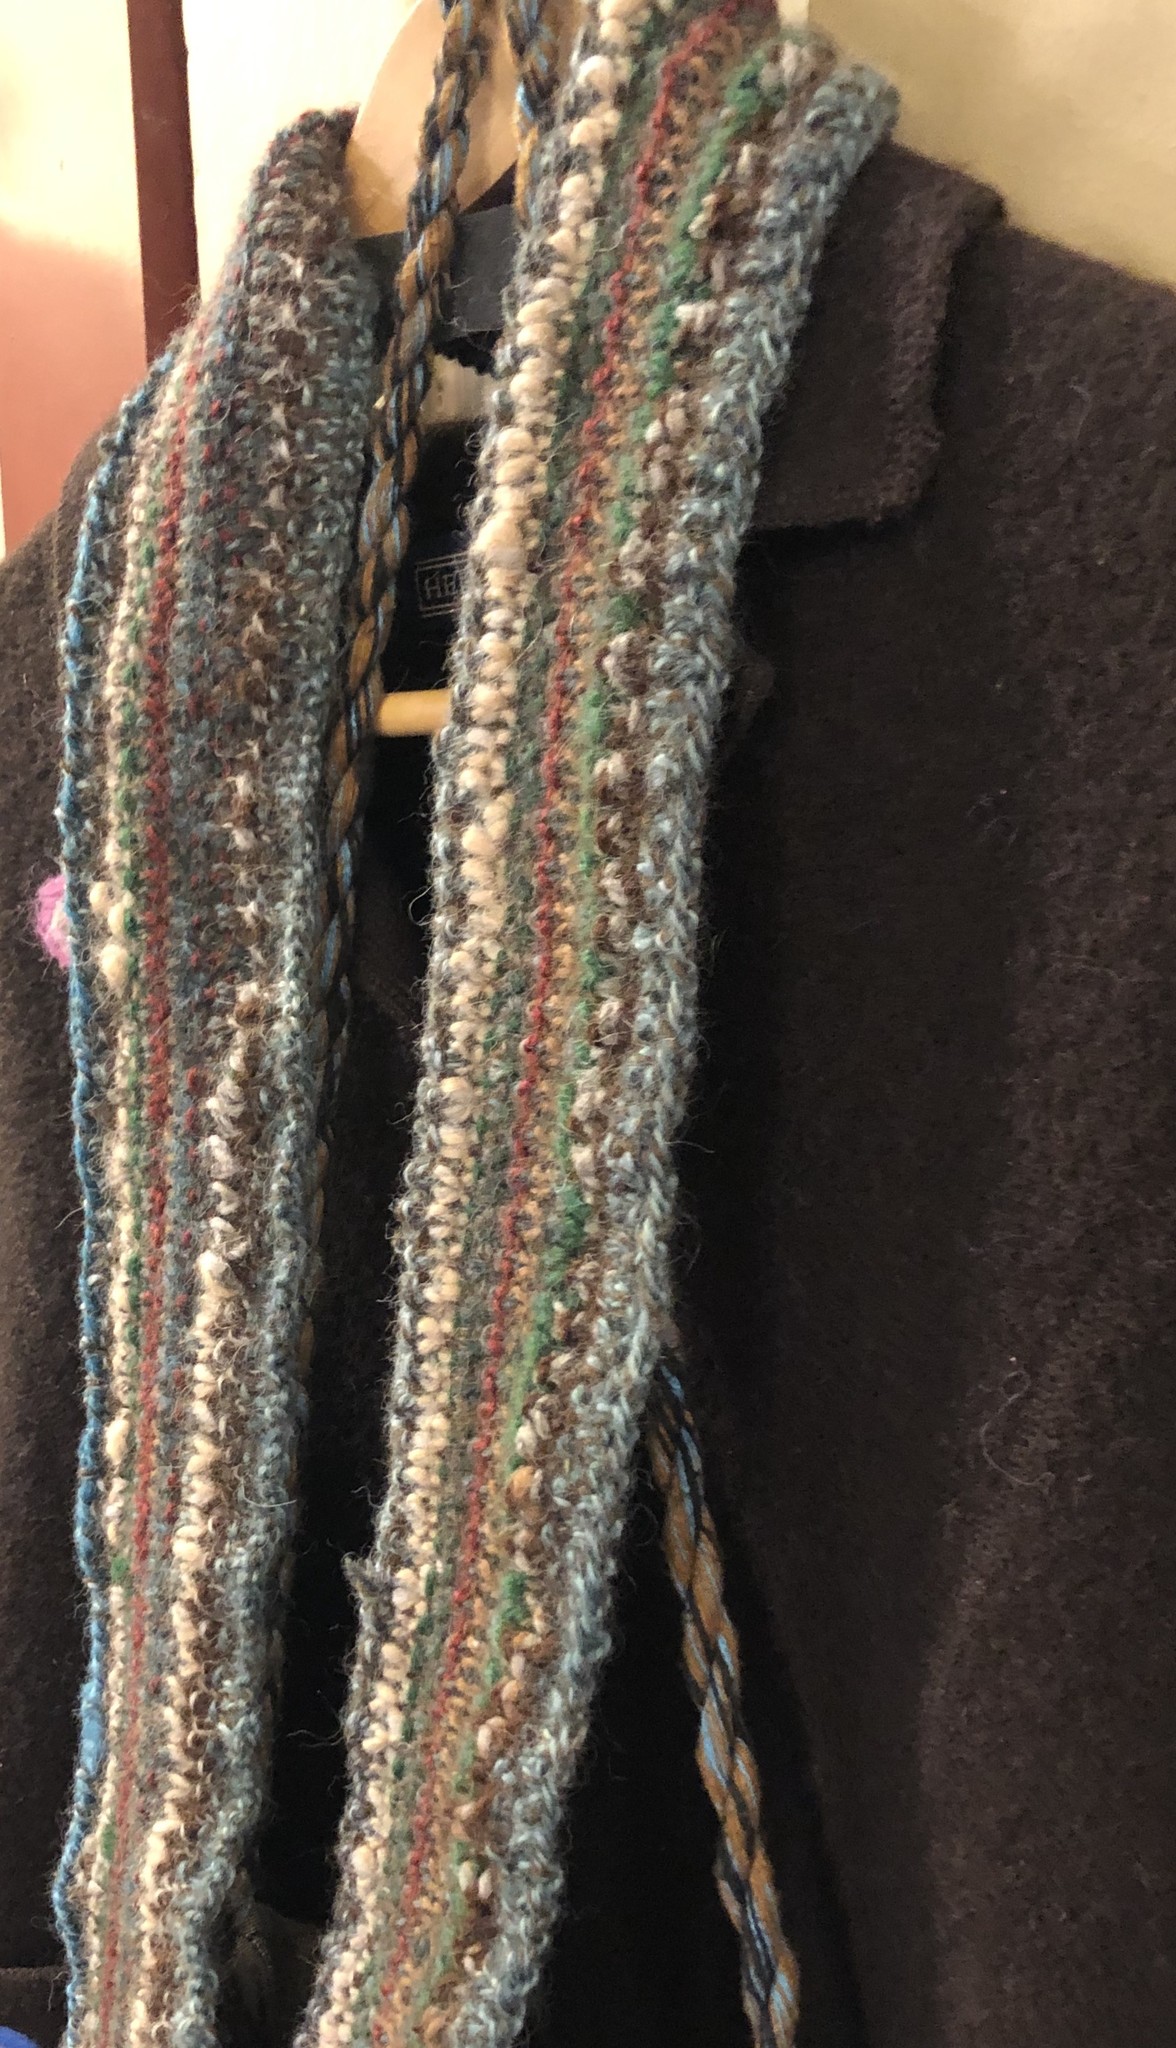 Fringed handknit scarf